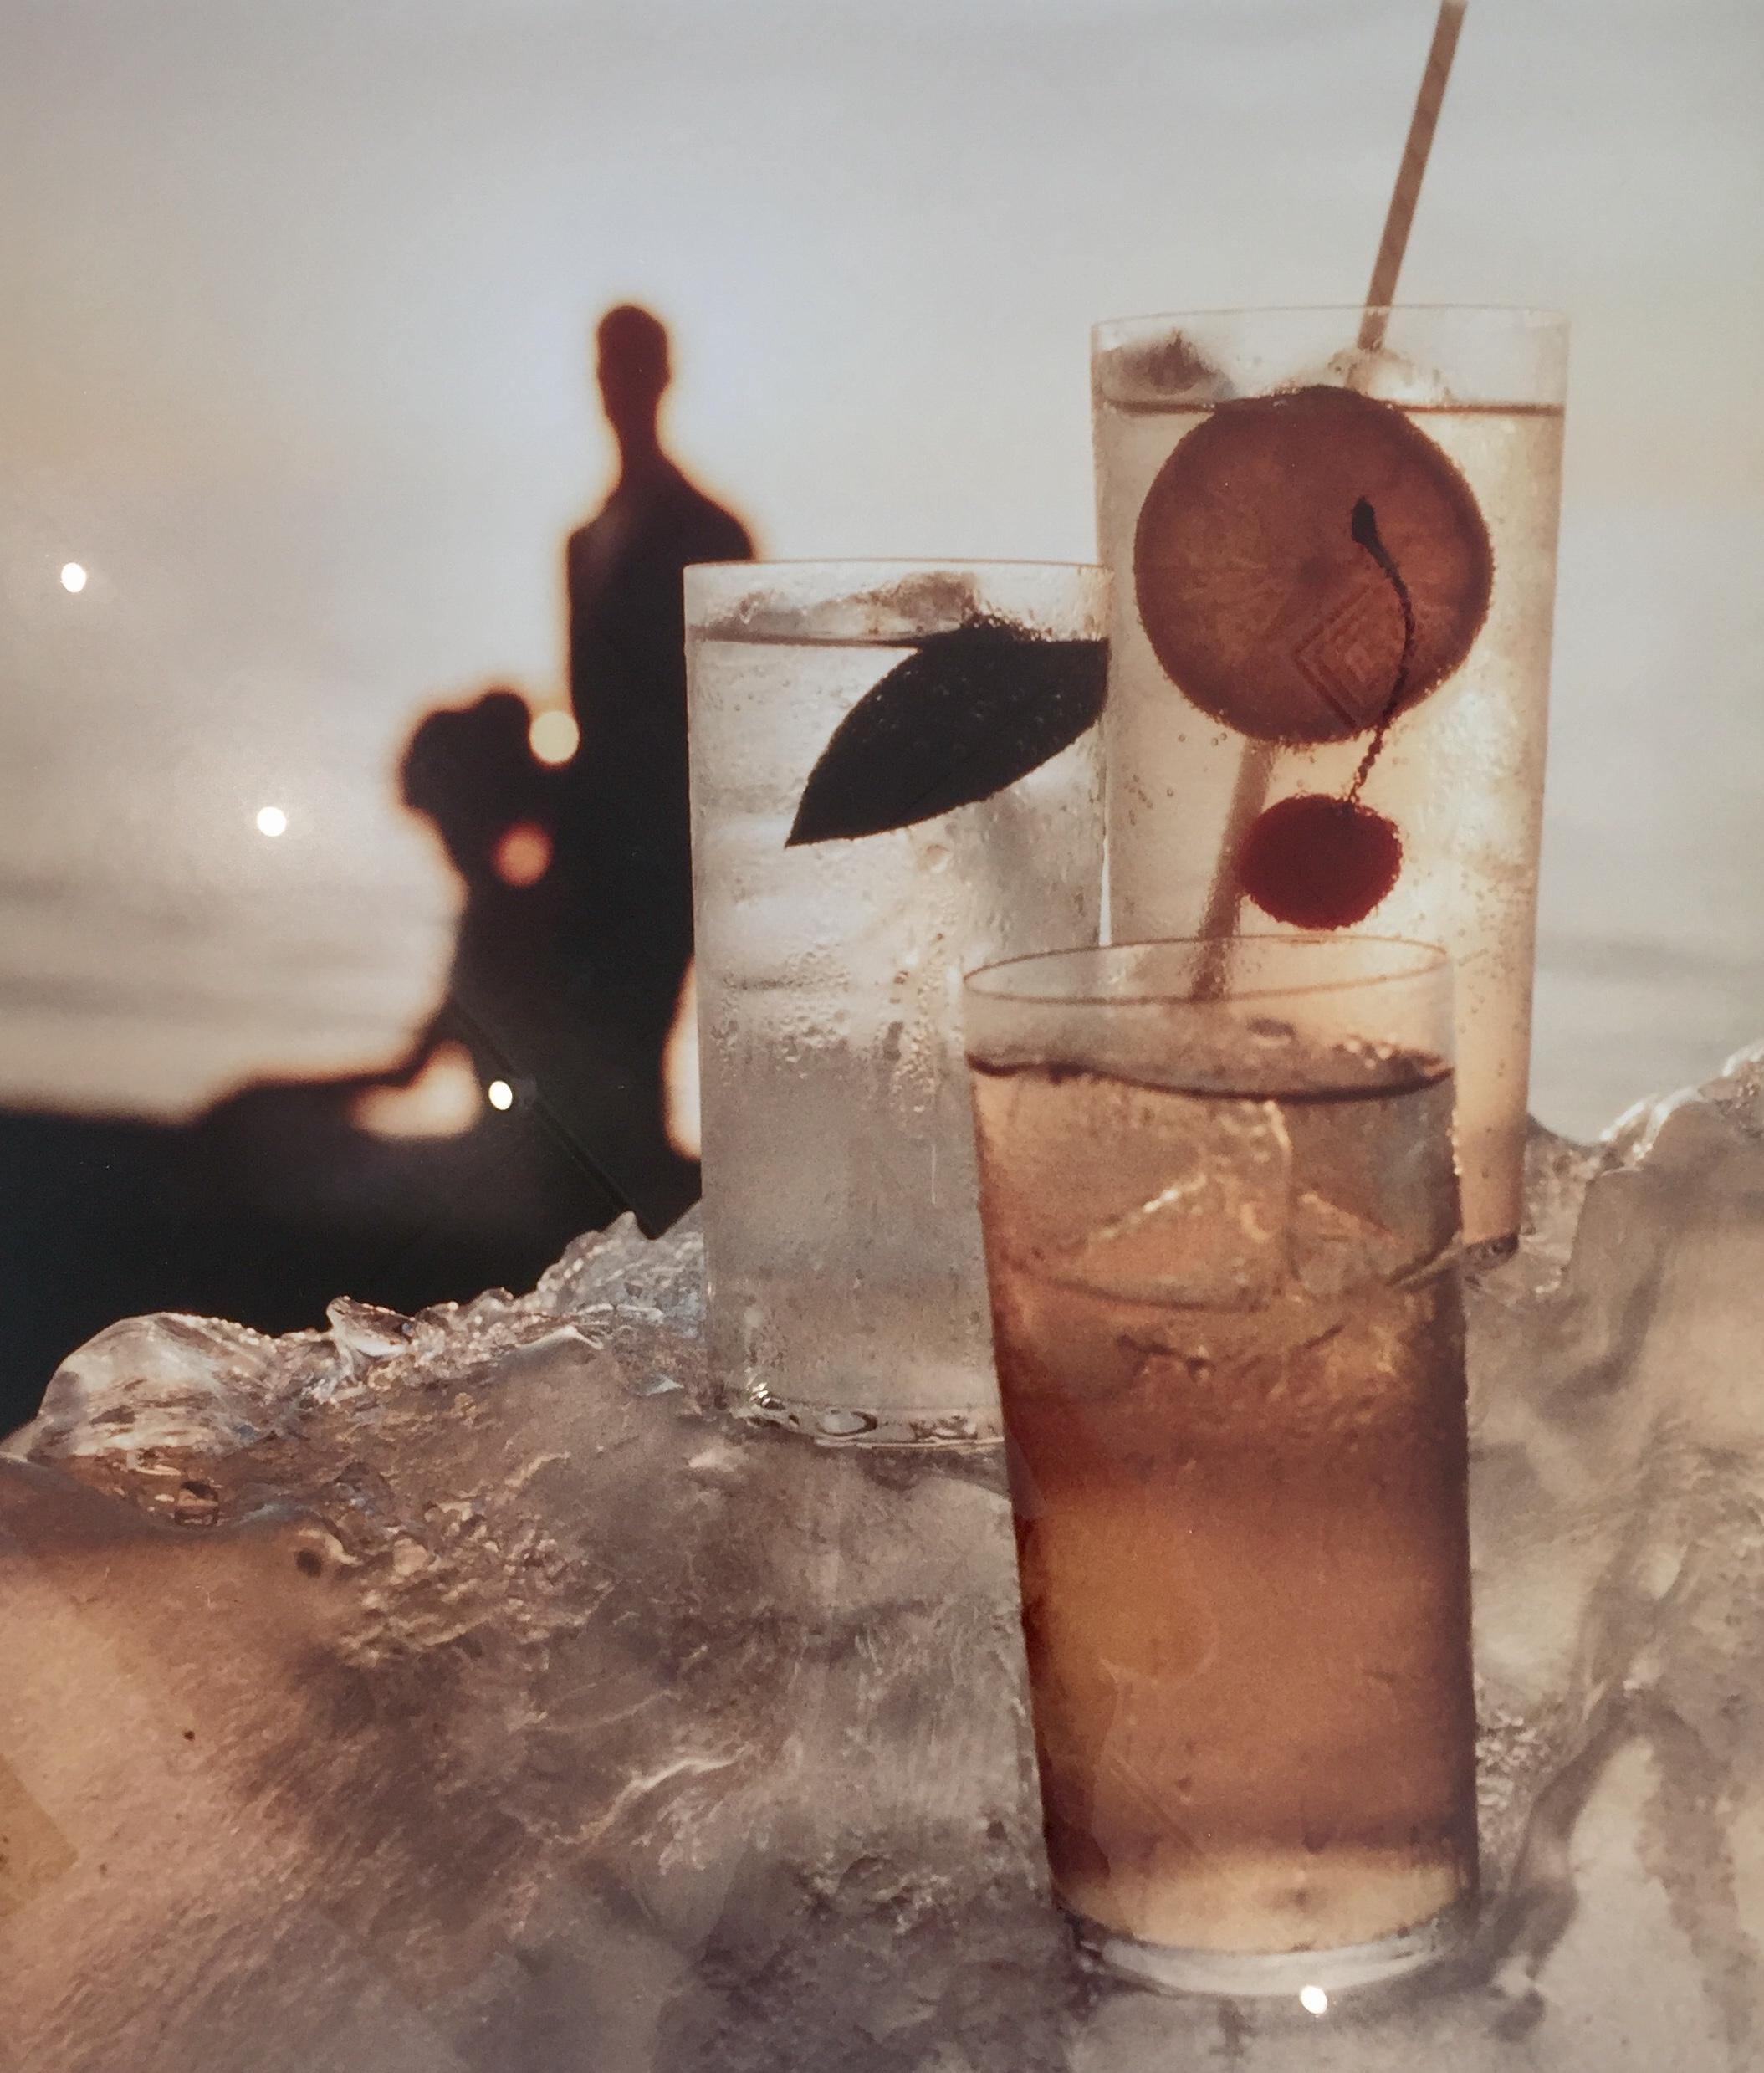 How Many Swallows Make a Summer? Smirnoff Vodka, 1961 - Photograph by Bert Stern